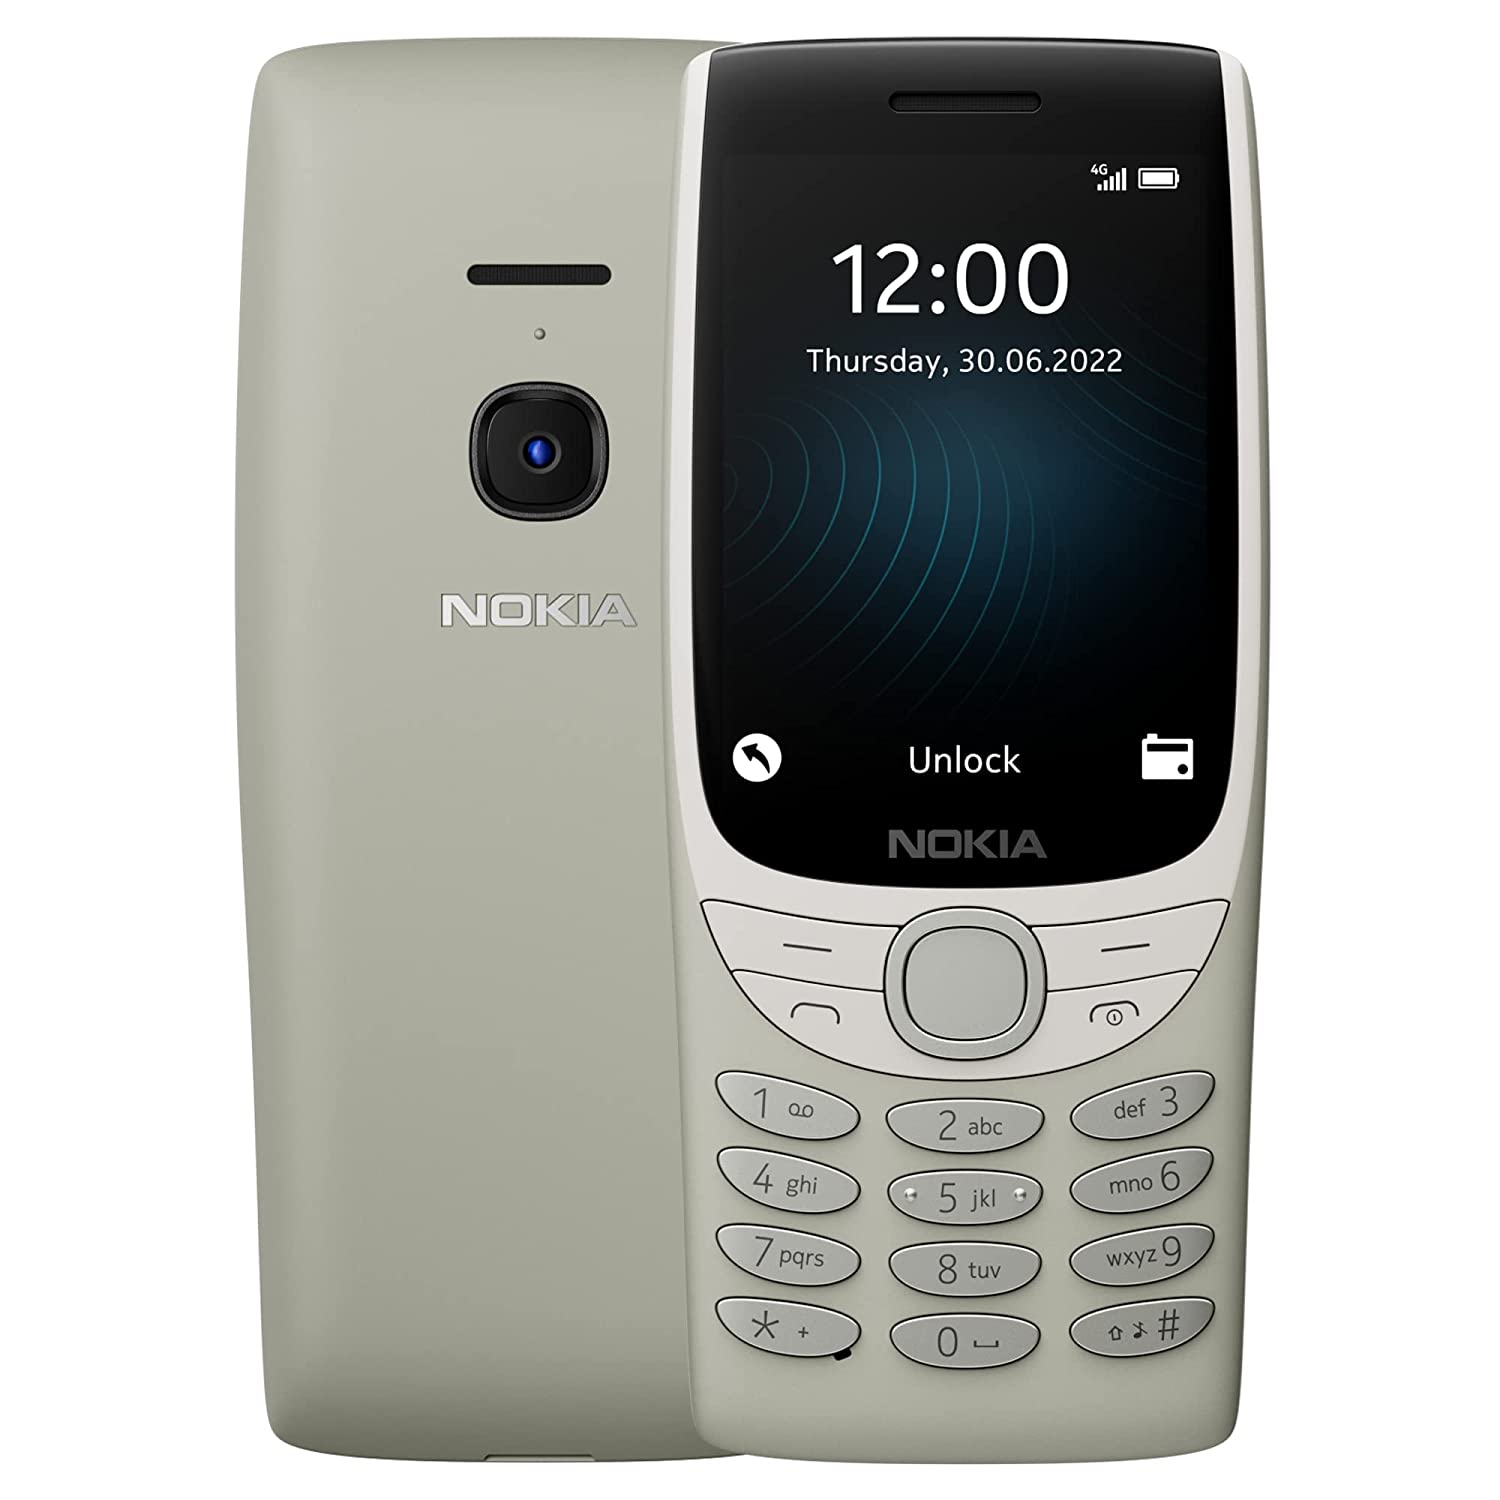 Nokia 8210 4G Volte keypad Phone with Dual SIM, Big Display, inbuilt MP3 Player & Wireless FM Radio | Sand-Mobile Phones-dealsplant